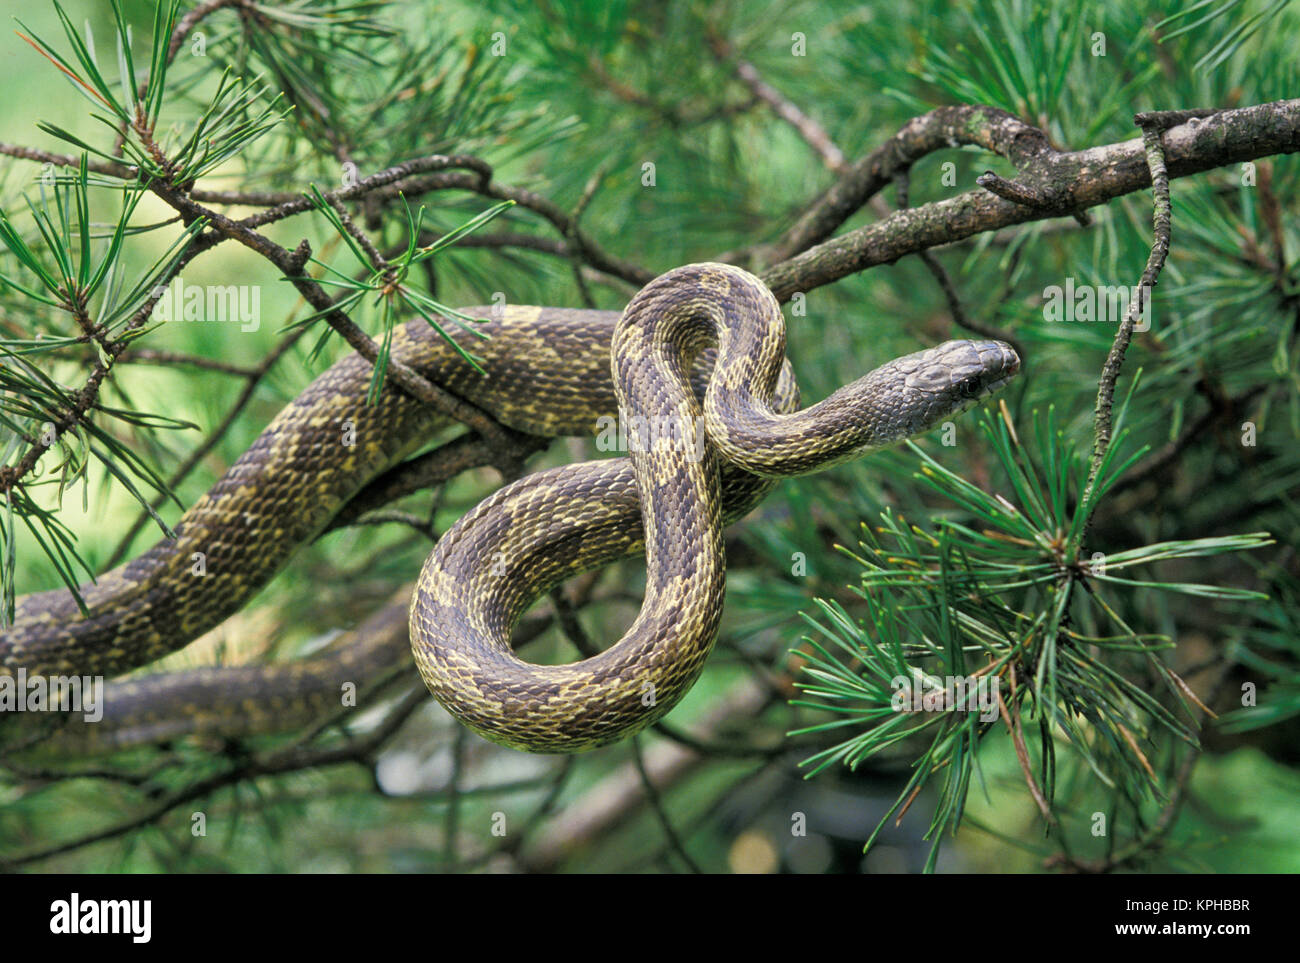 Black rat snake (Elaphe obsoleta) climbing into pine tree Stock Photo